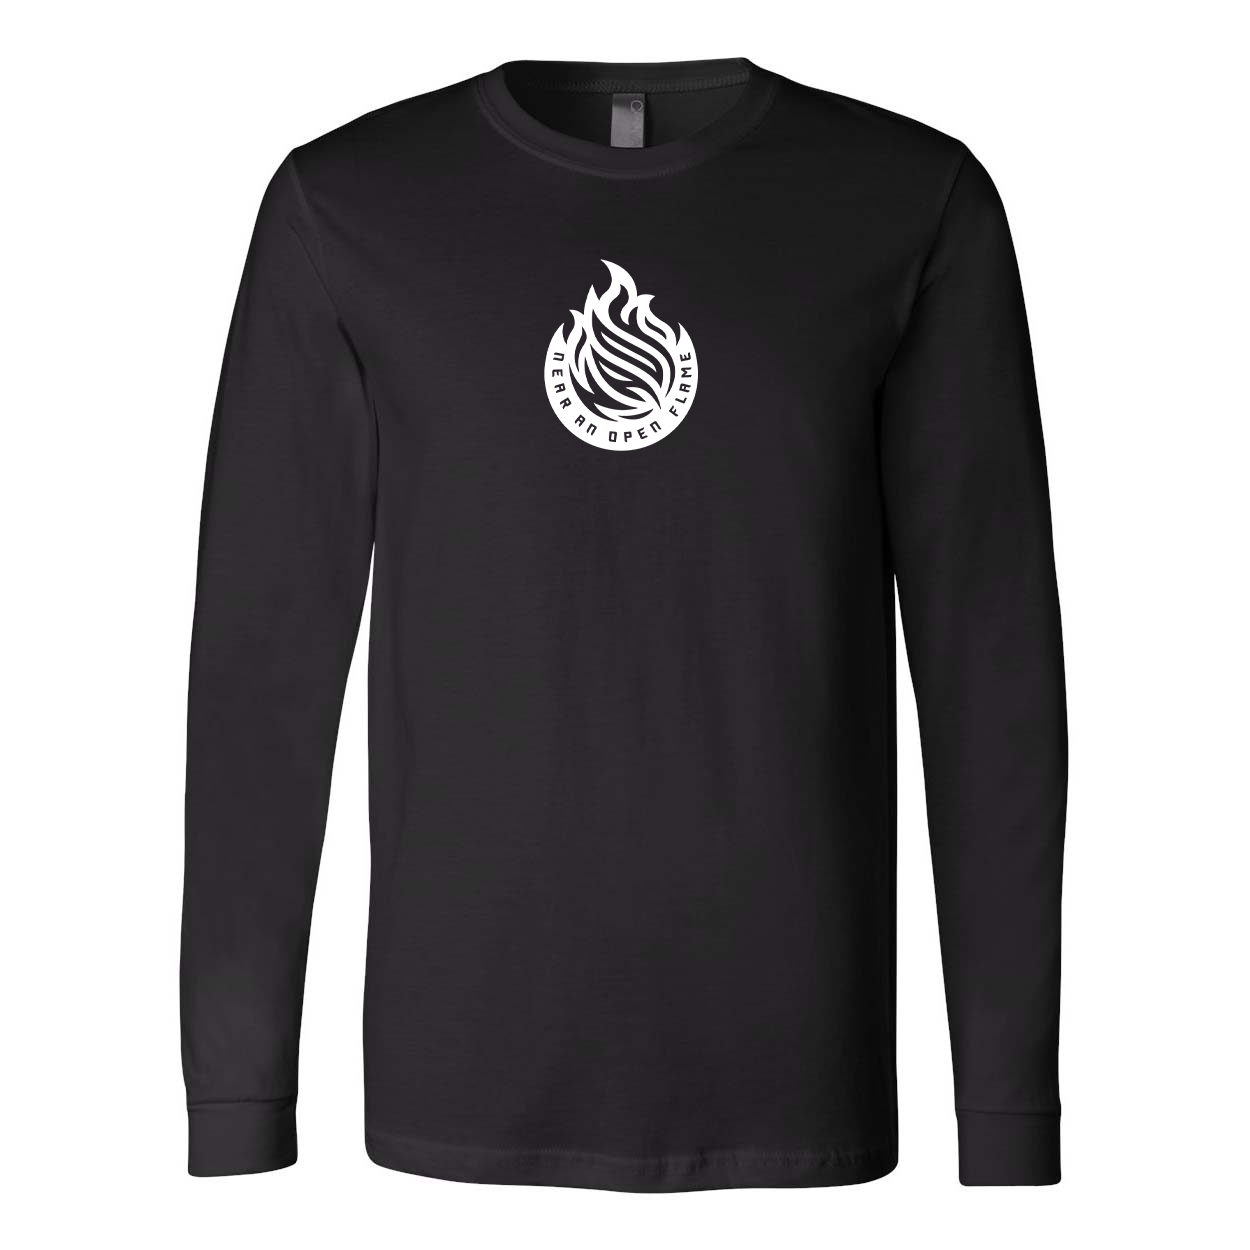 Near An Open Flame Classic Premium Long Sleeve T-Shirt Black (White Logo)